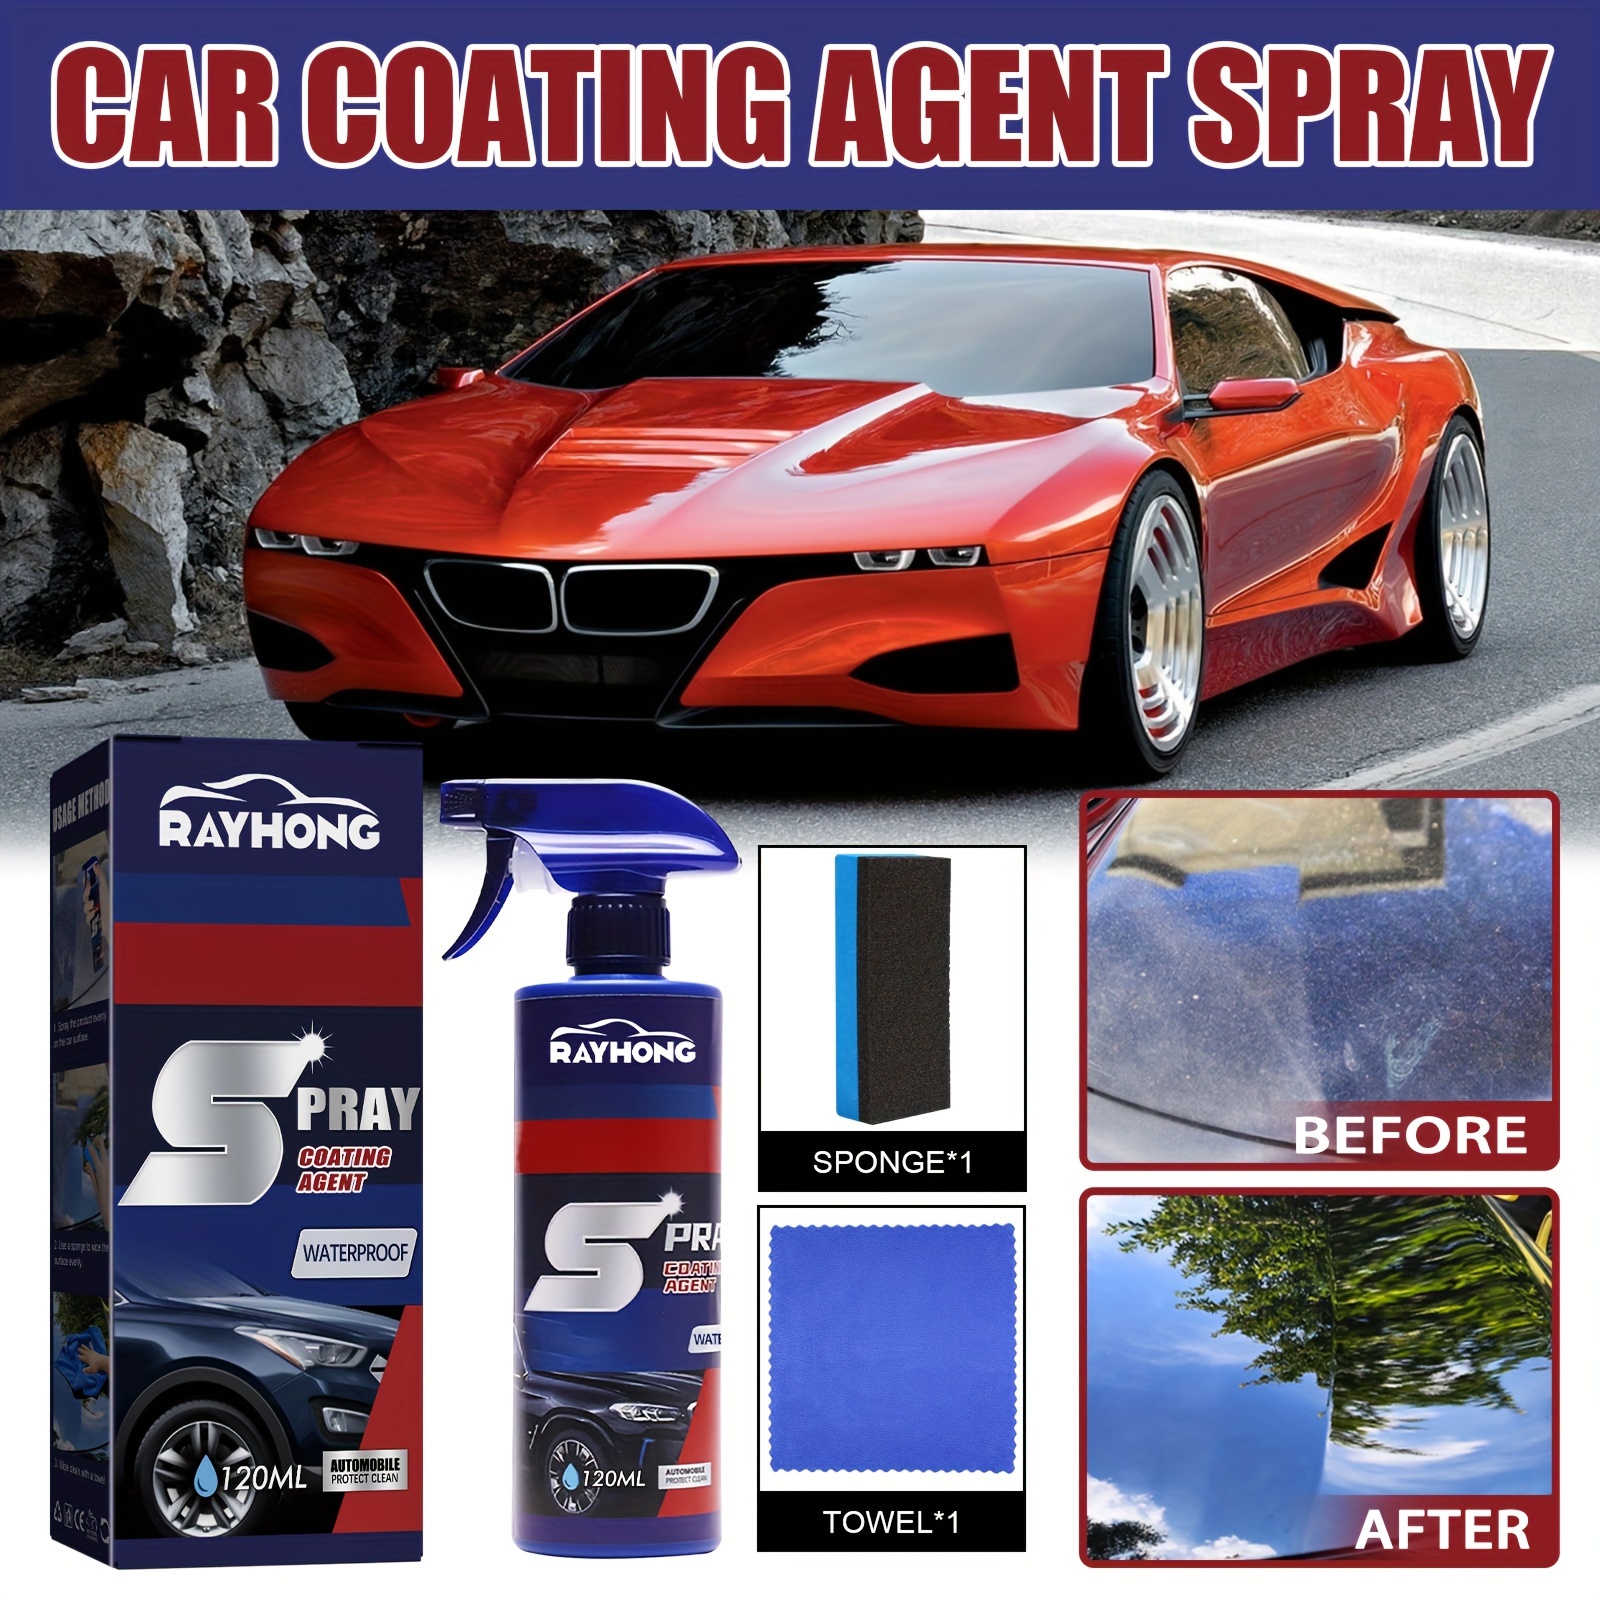  Sopami Car Coating Spray, Sopami, Sopami Car Spray, Sopami  Quick Effect Coating Agent, Car Wax Ceramic Coating, 3 in 1 High Protection  Quick Car Coating Spray, Quick Coat Car Wax Polish